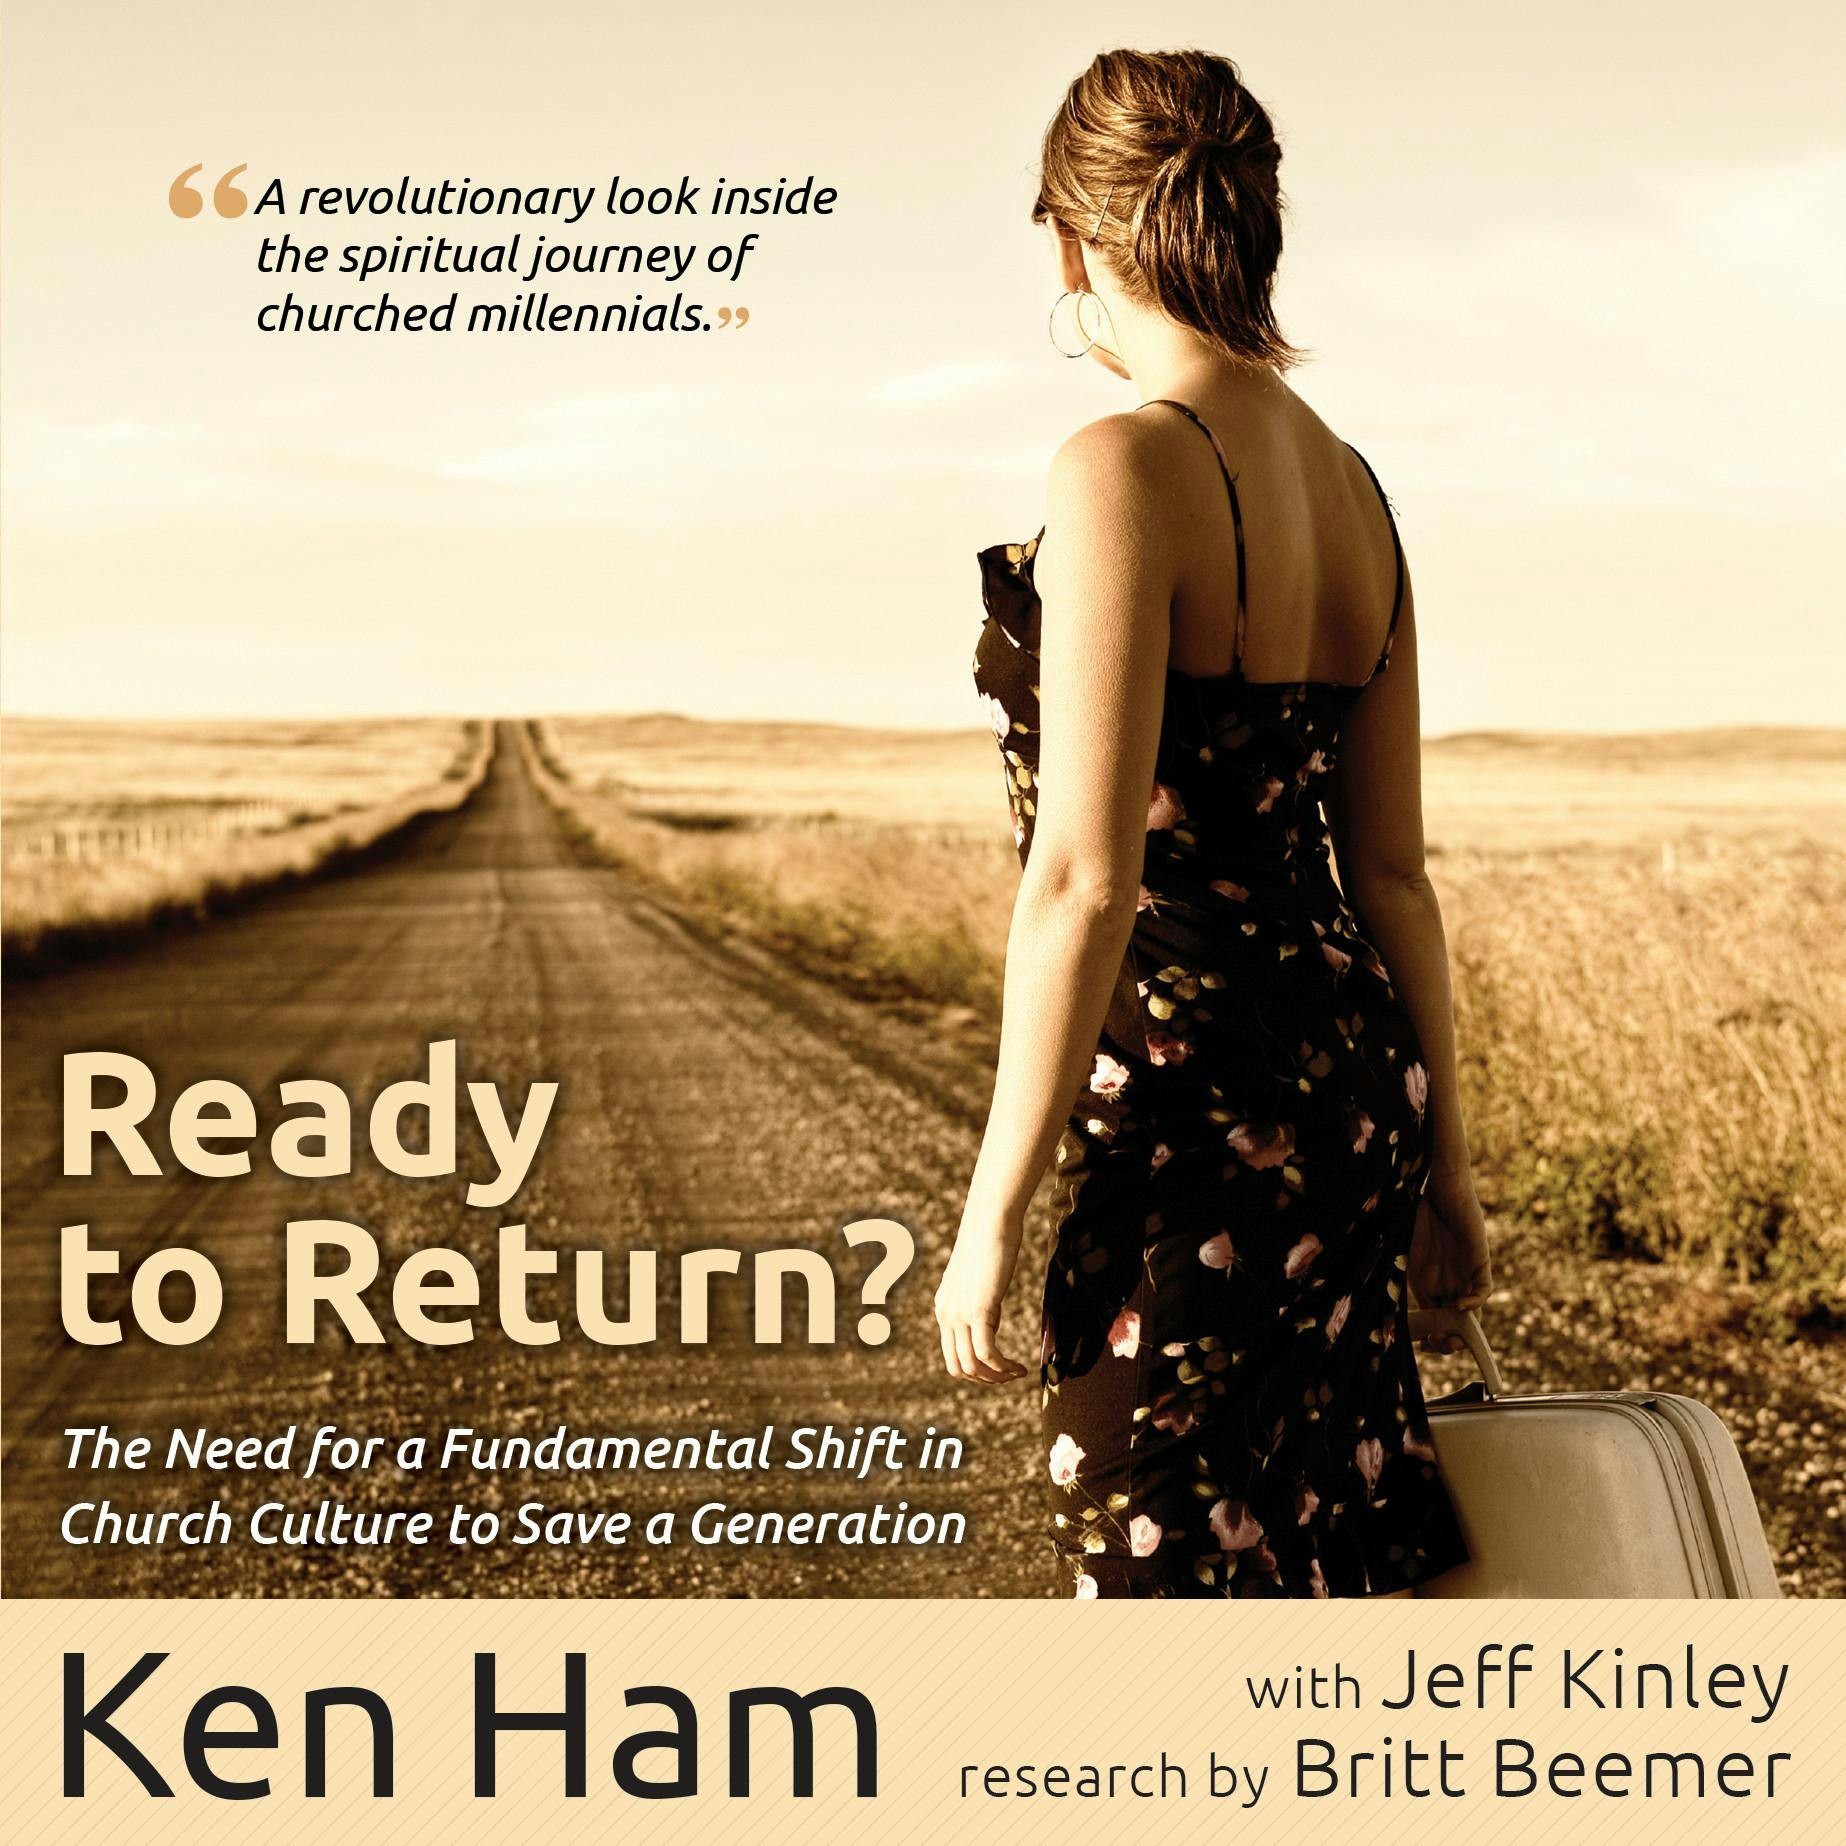 Ready To Return: Bringing Back the Church's Lost Generation - Ken Ham, Jeff Kinley, Britt Beemer